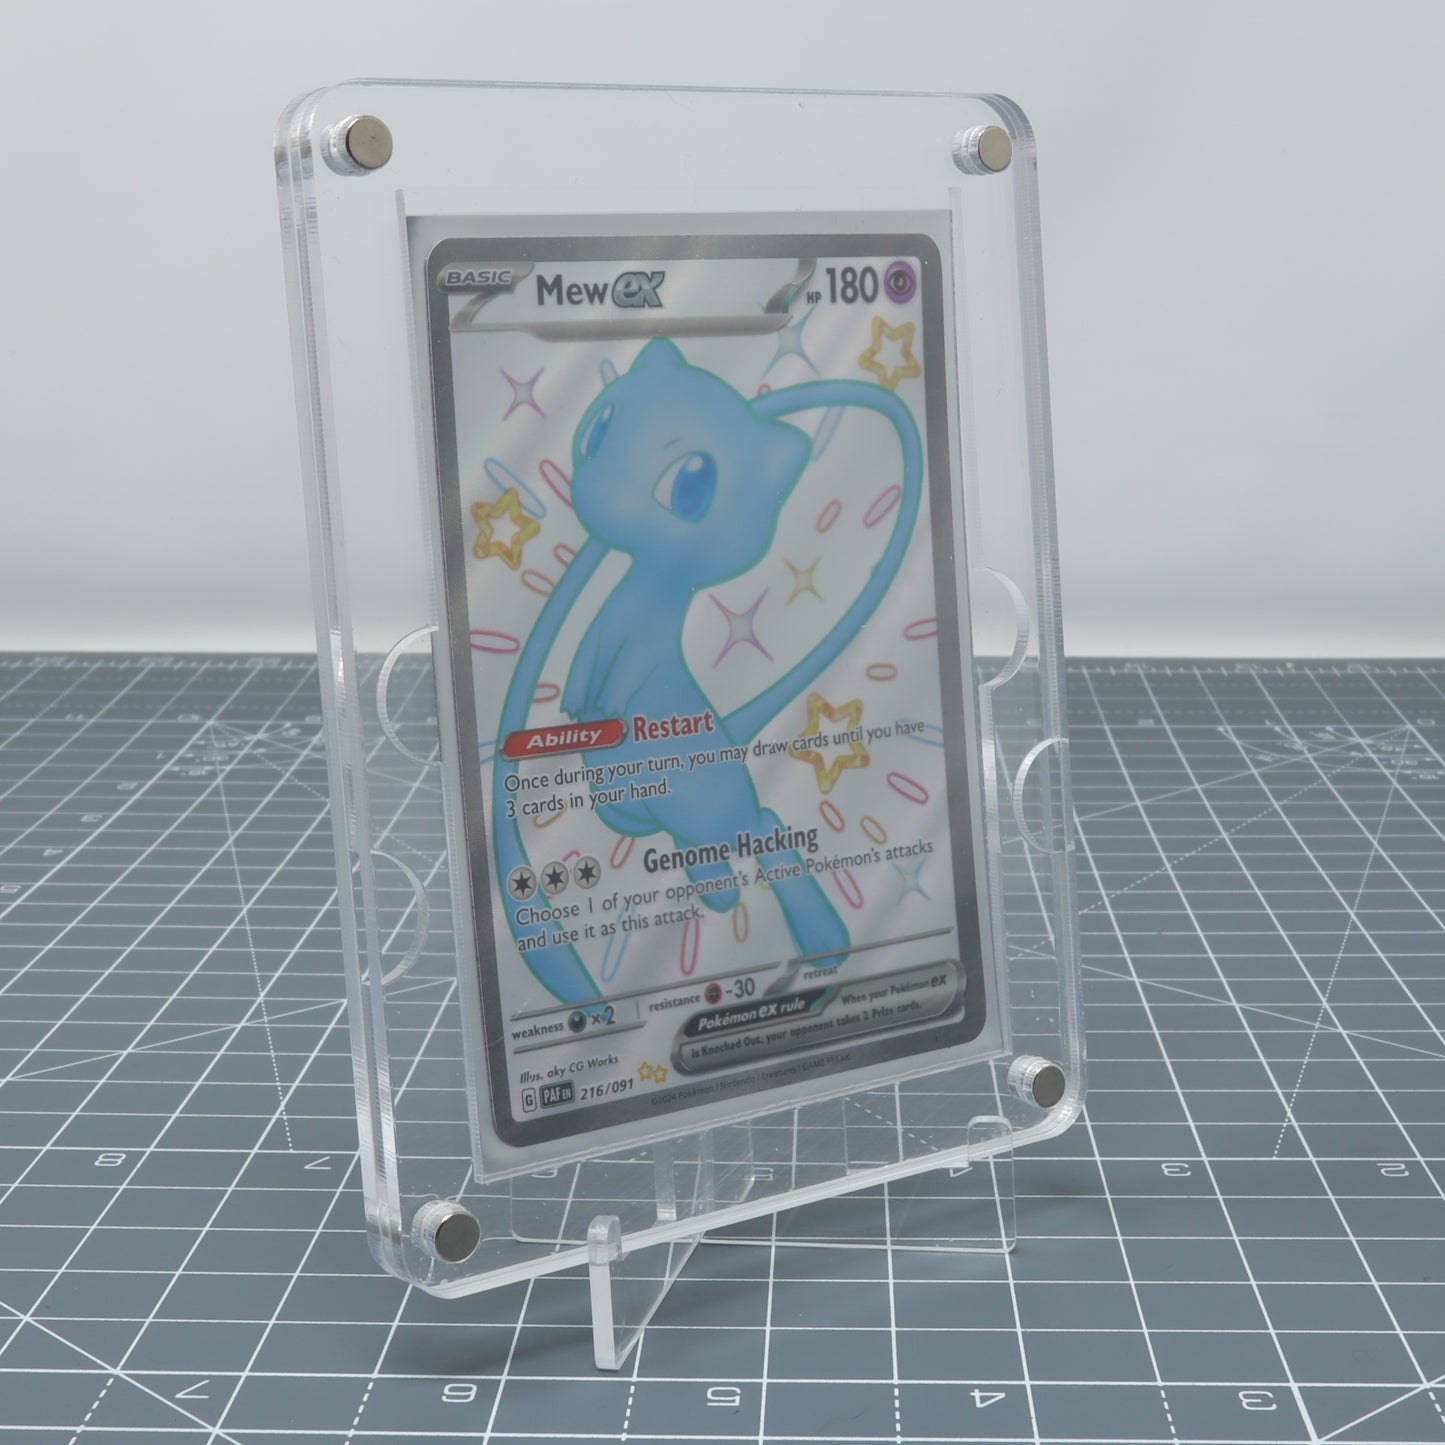 Single TCG Premium Sleeved Card Magnetic Display Case